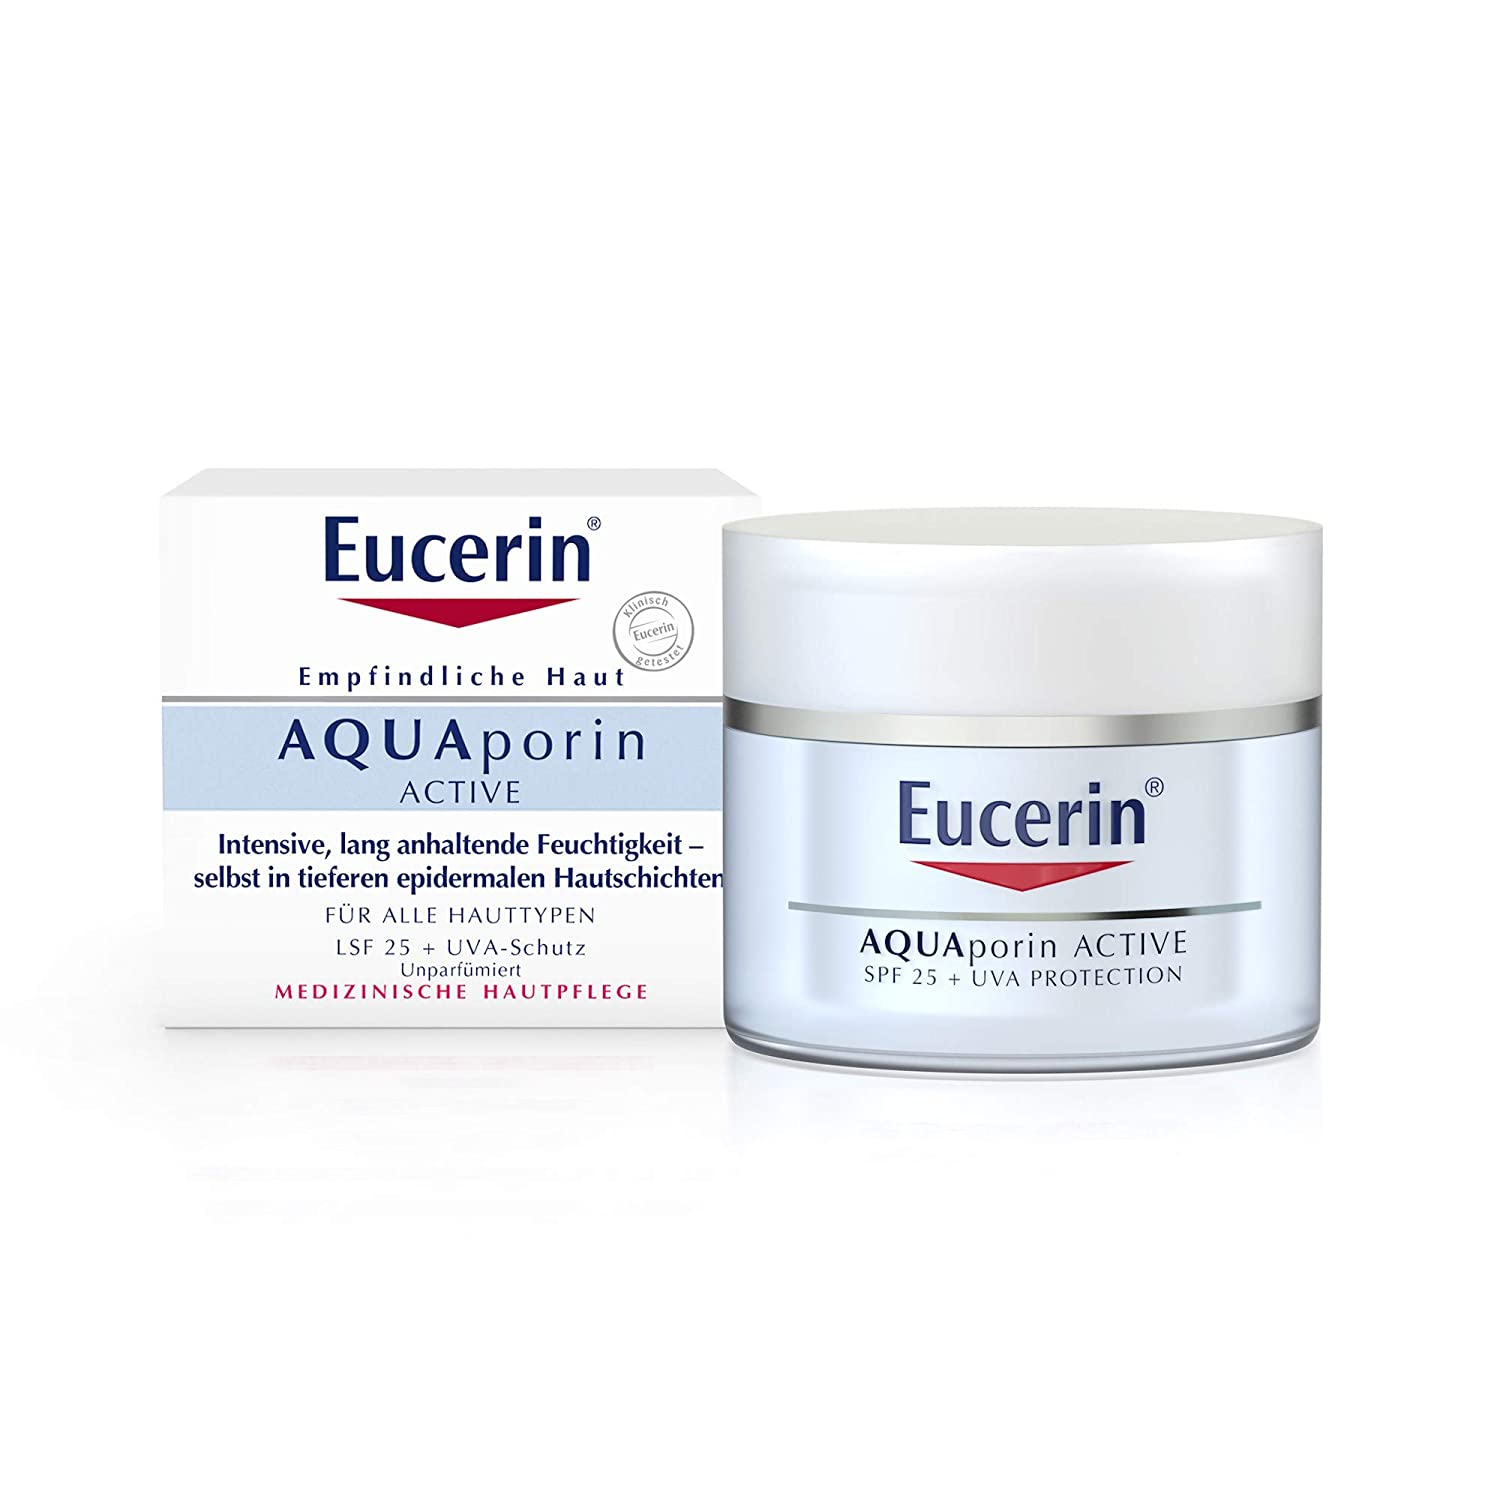 Eucerin AQUAporin Active Sensitive Skin SPF 25, 50 ml Cream